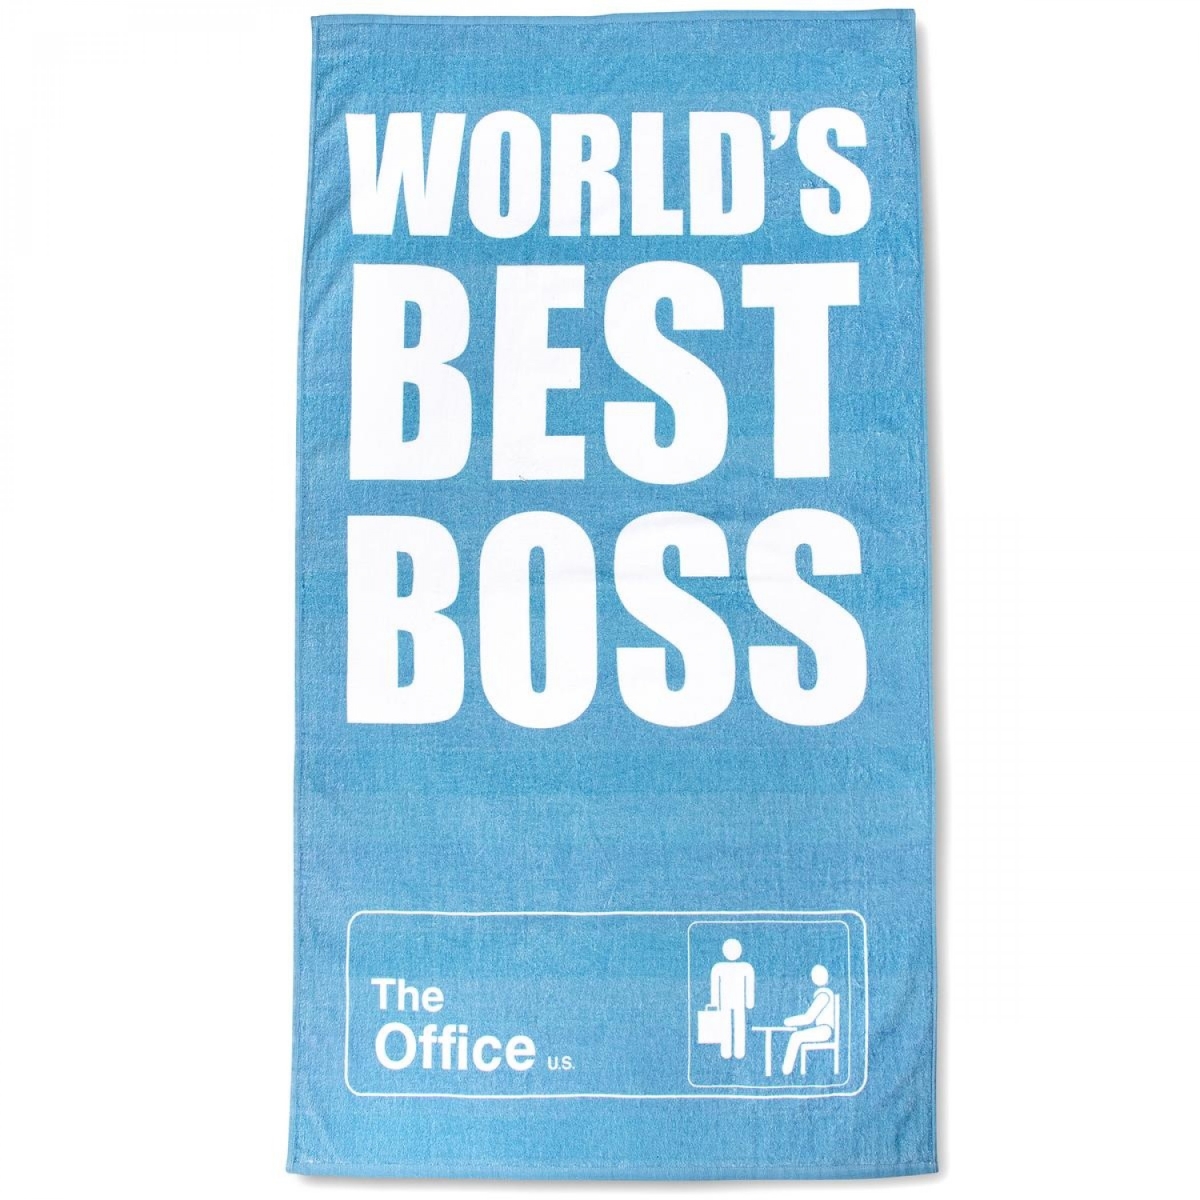 THE OFFICE 849501 The Office Michael Scott Worlds Best Boss Oversized Beach Towel